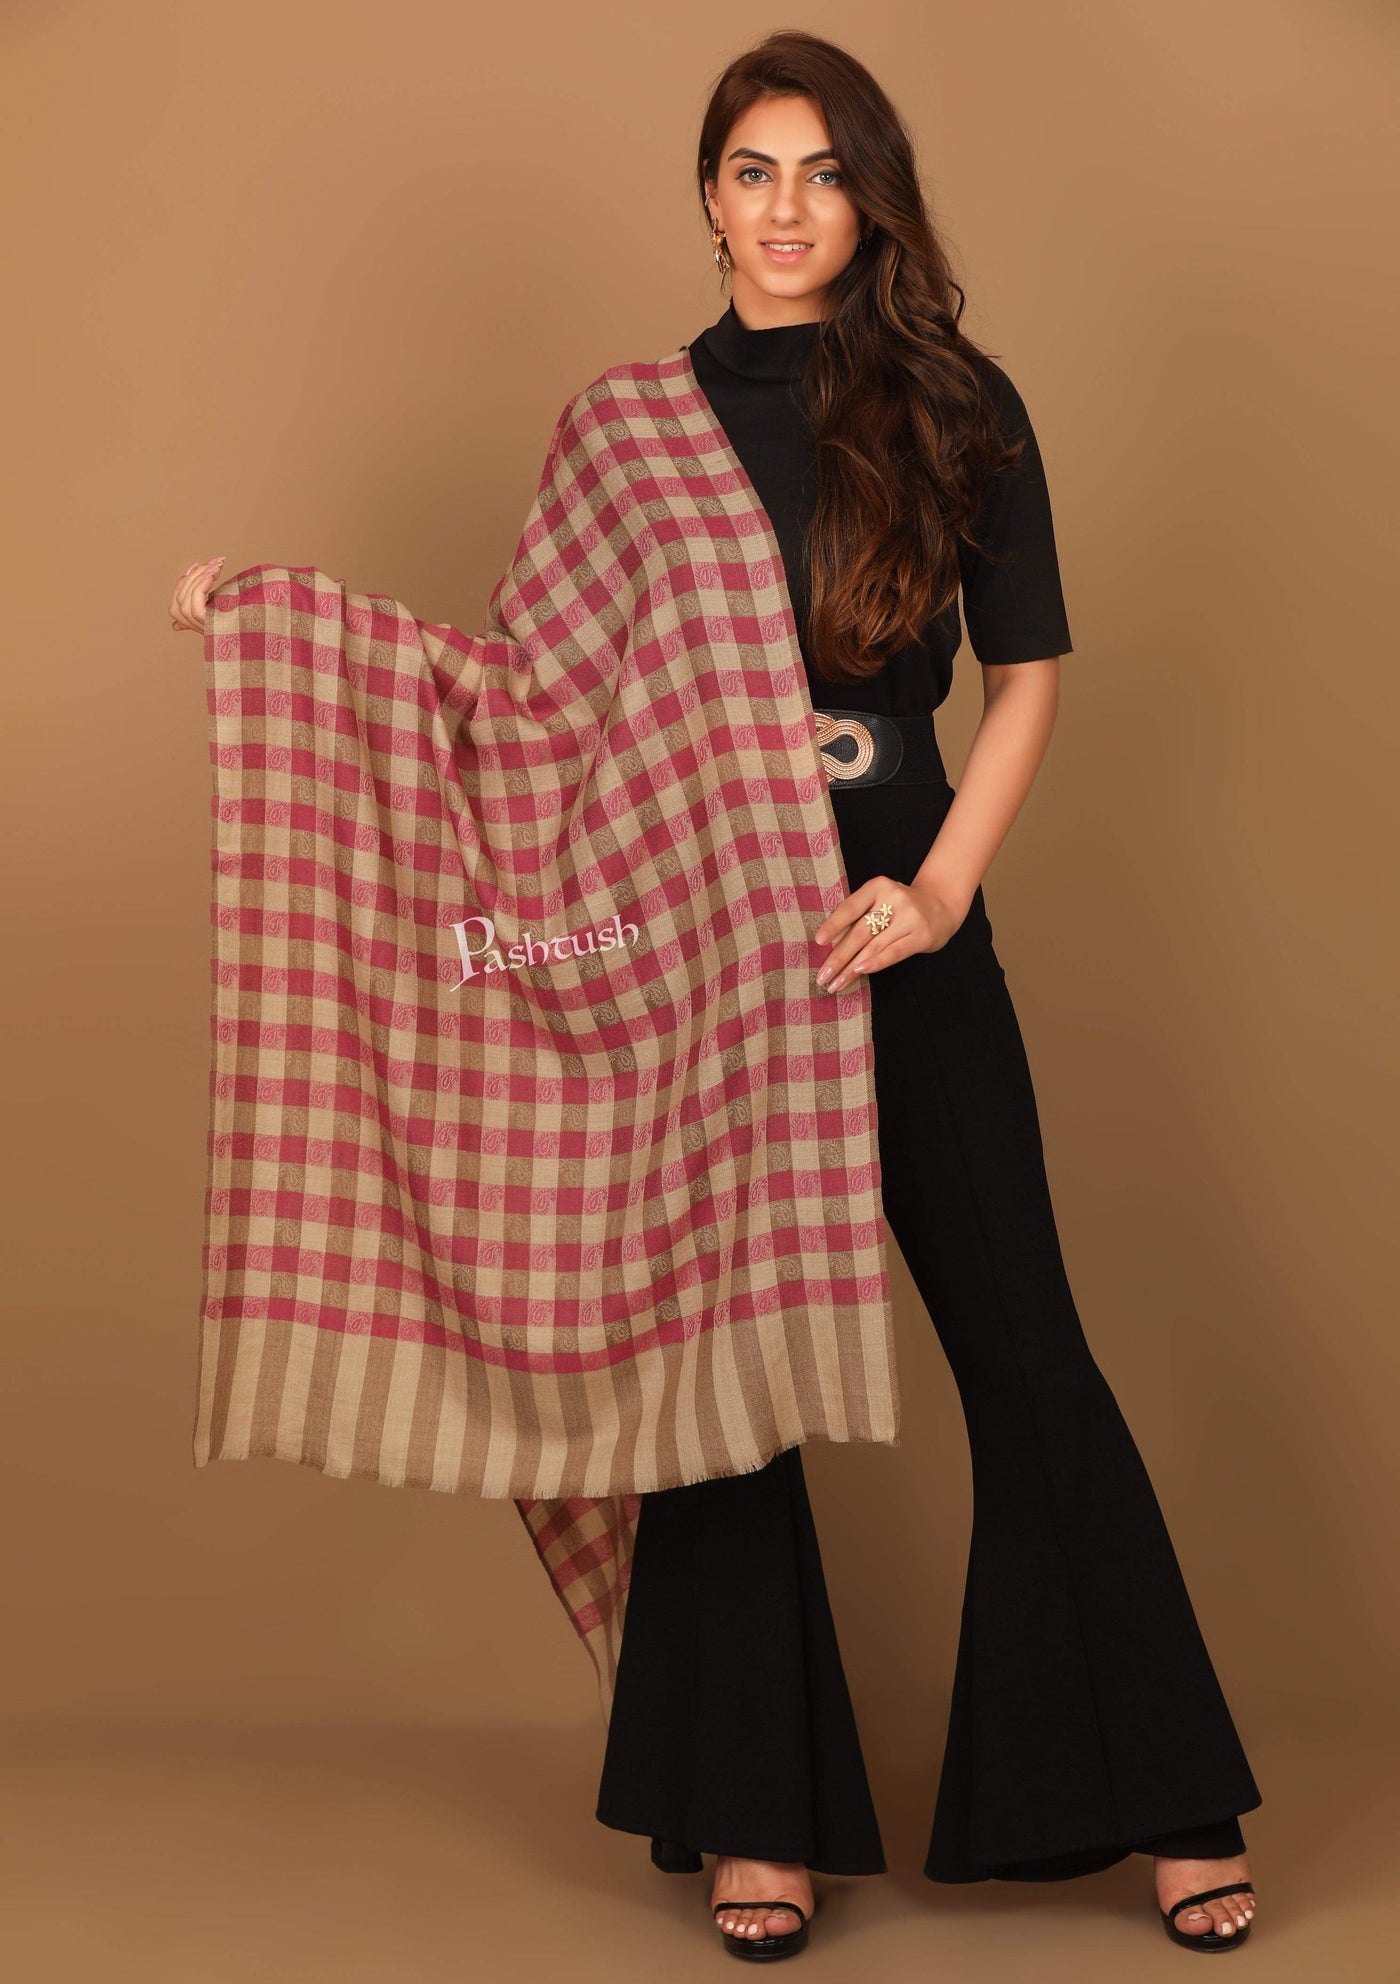 Pashtush India Stole Pashtush Womens Luxury Wool Check Scarf,  Reversible, Extra-Fine, Beige and Pink